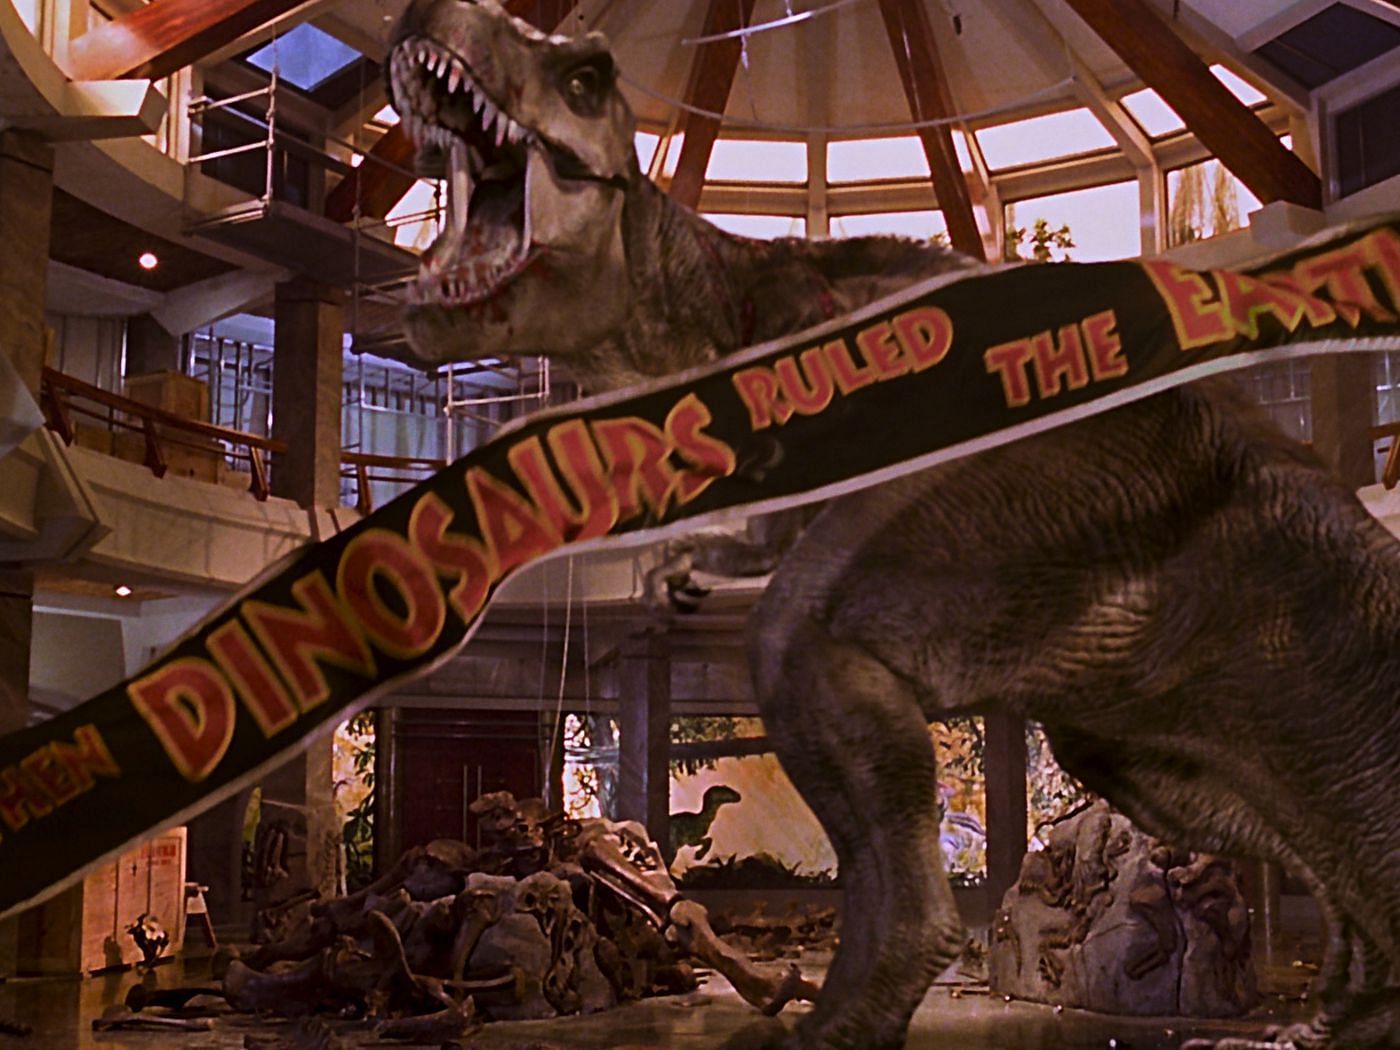 Jurassic Park (Image via Jurassic Park)